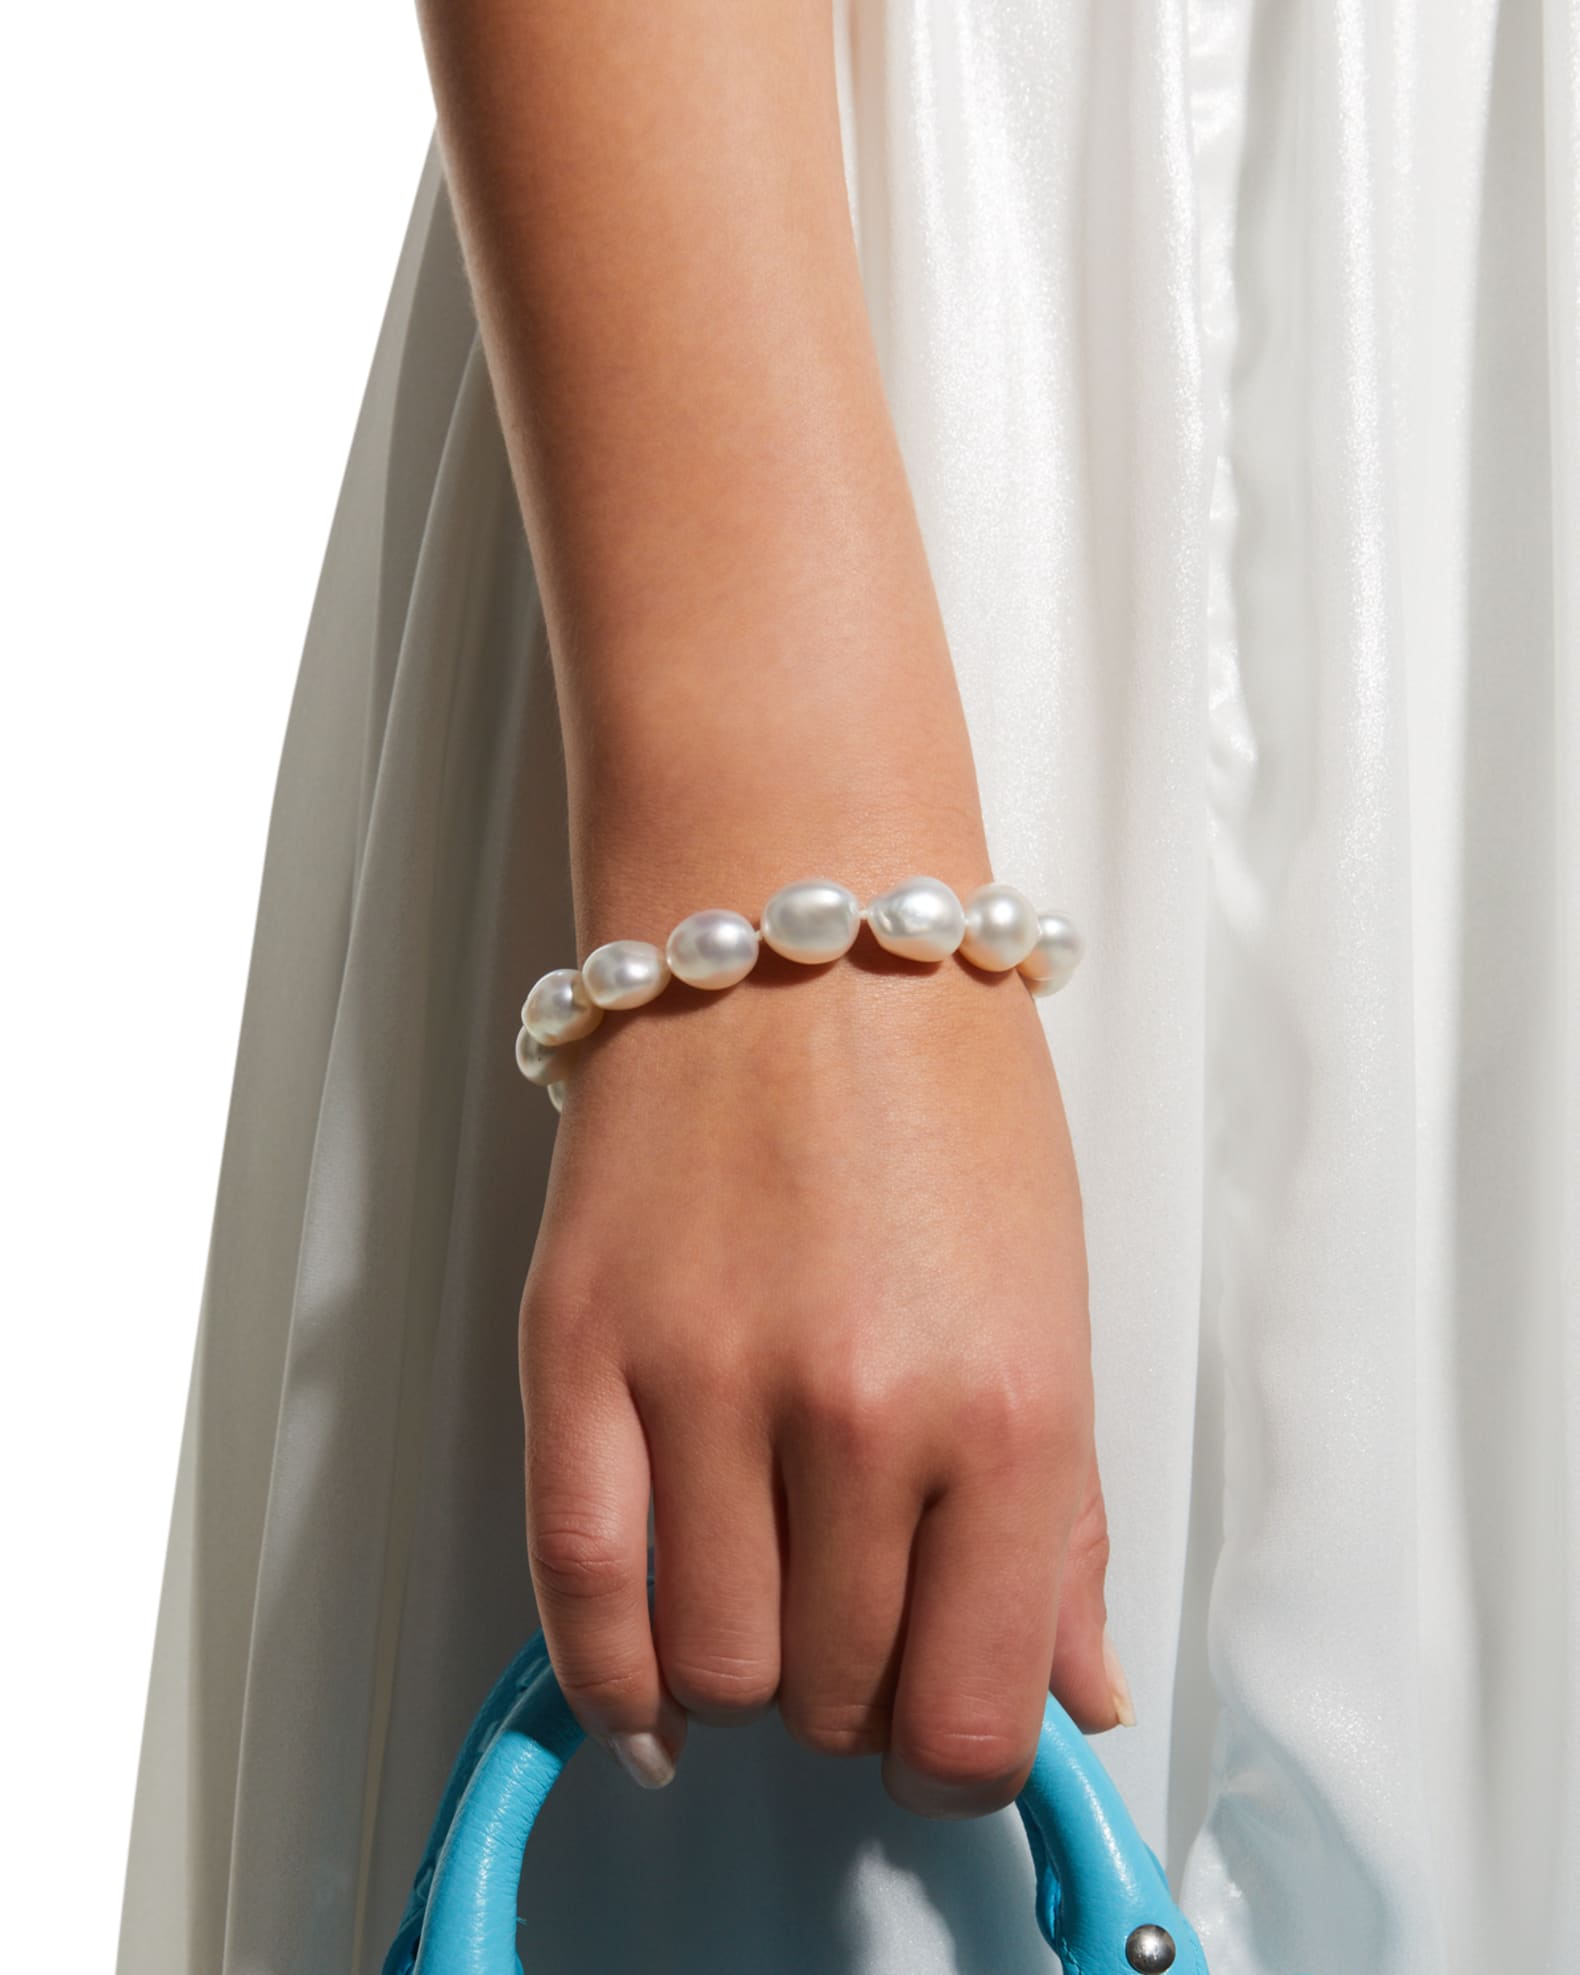 White South Sea Baroque Pearl Leather Bracelet - Various Sizes